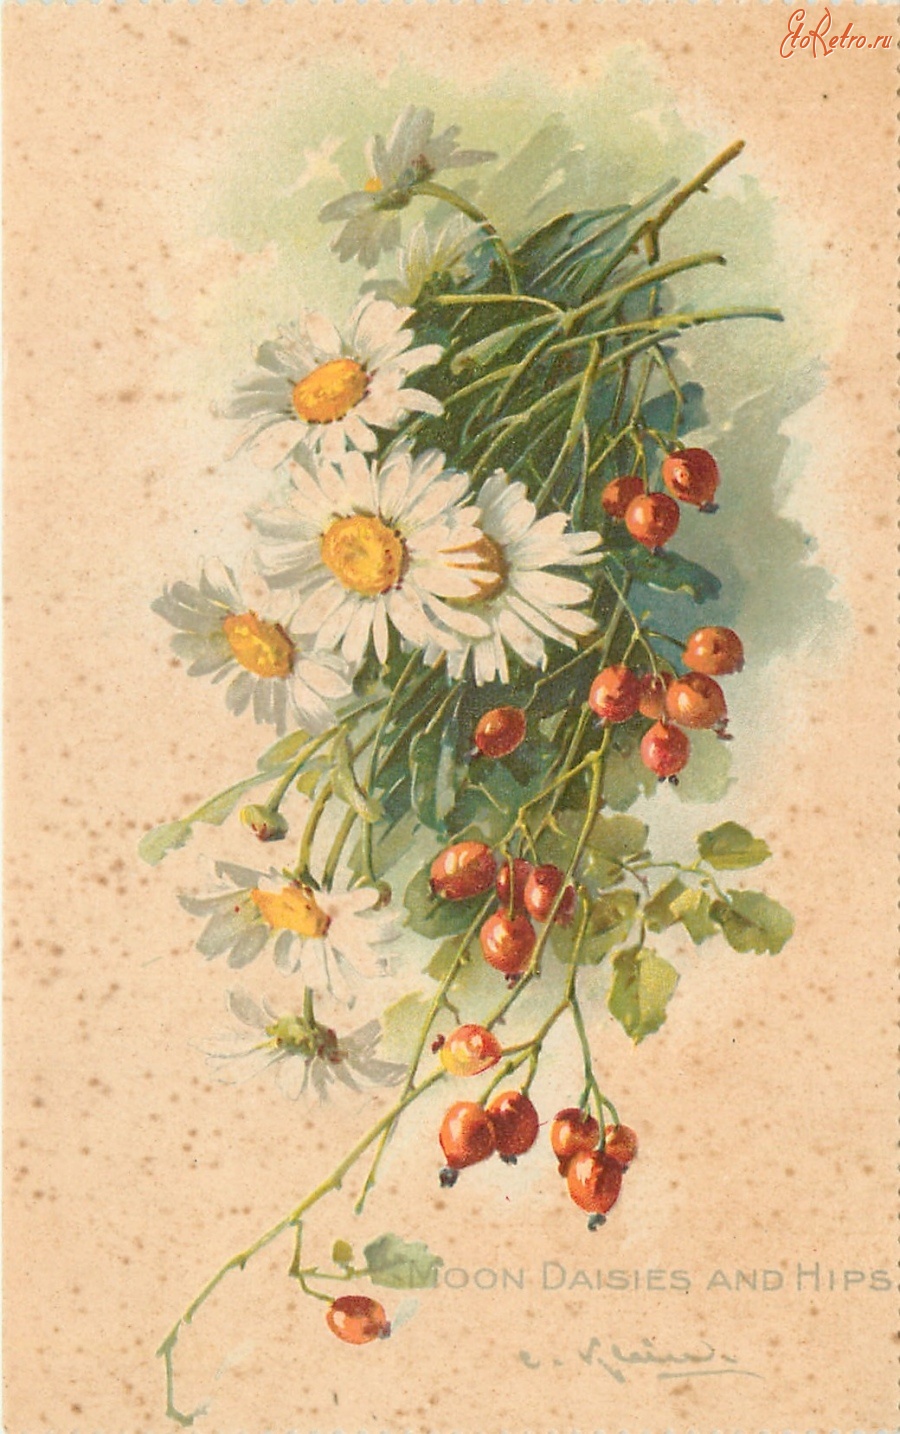 Ретро открытки - Луговые ромашки и ветка ягод  шиповника